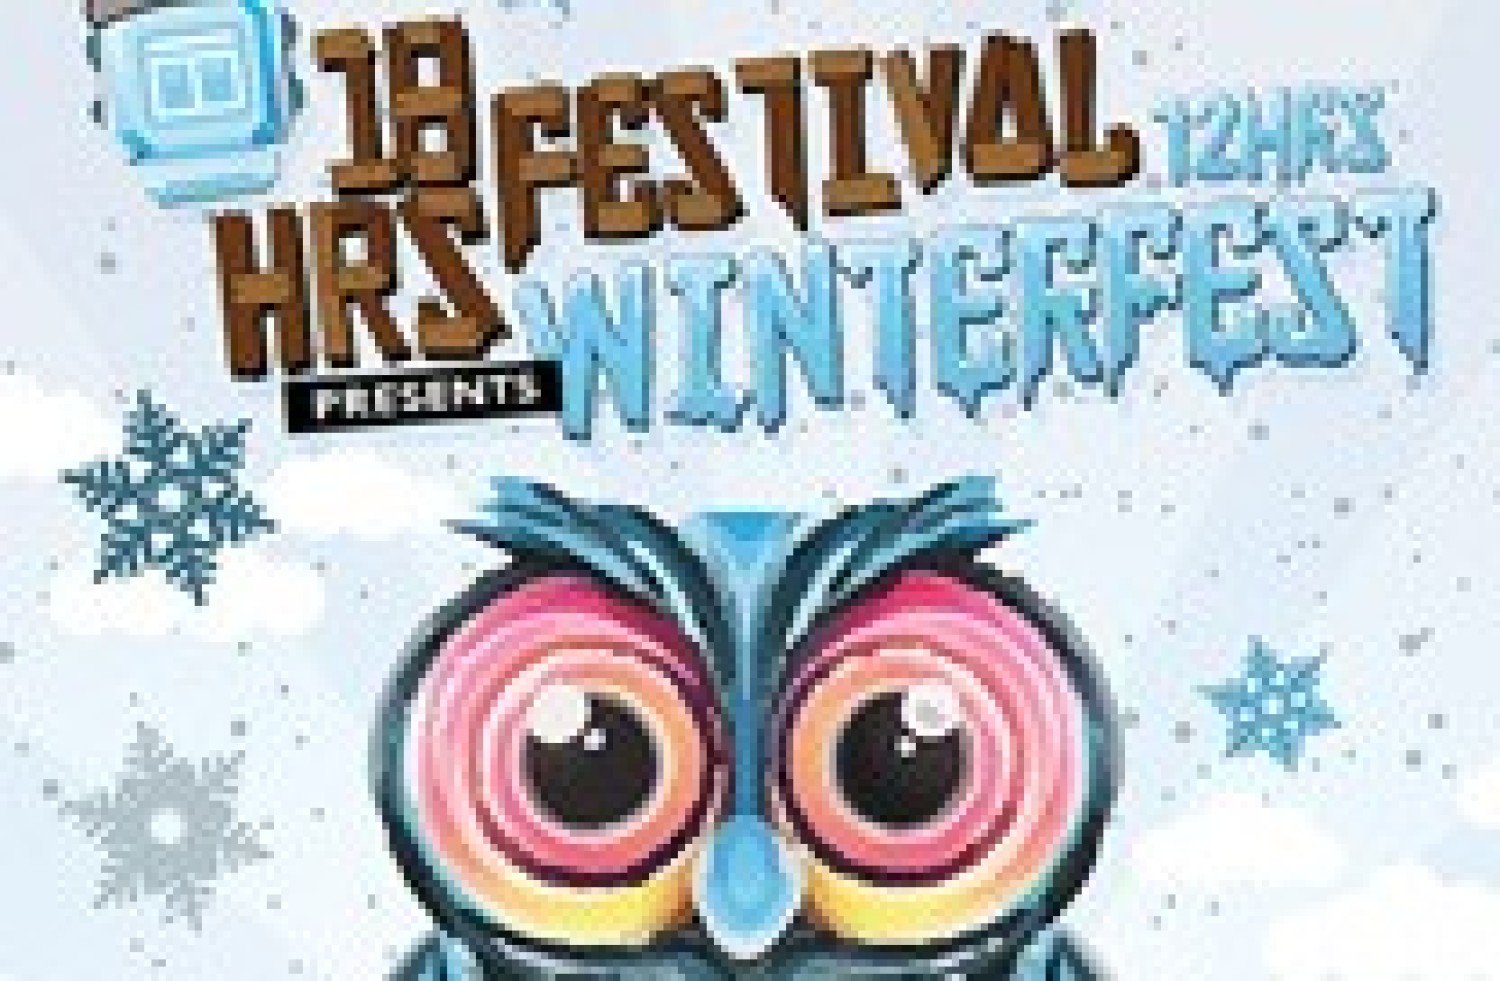 Party nieuws: 18hrs Festival viert de winter tijdens Winterfest